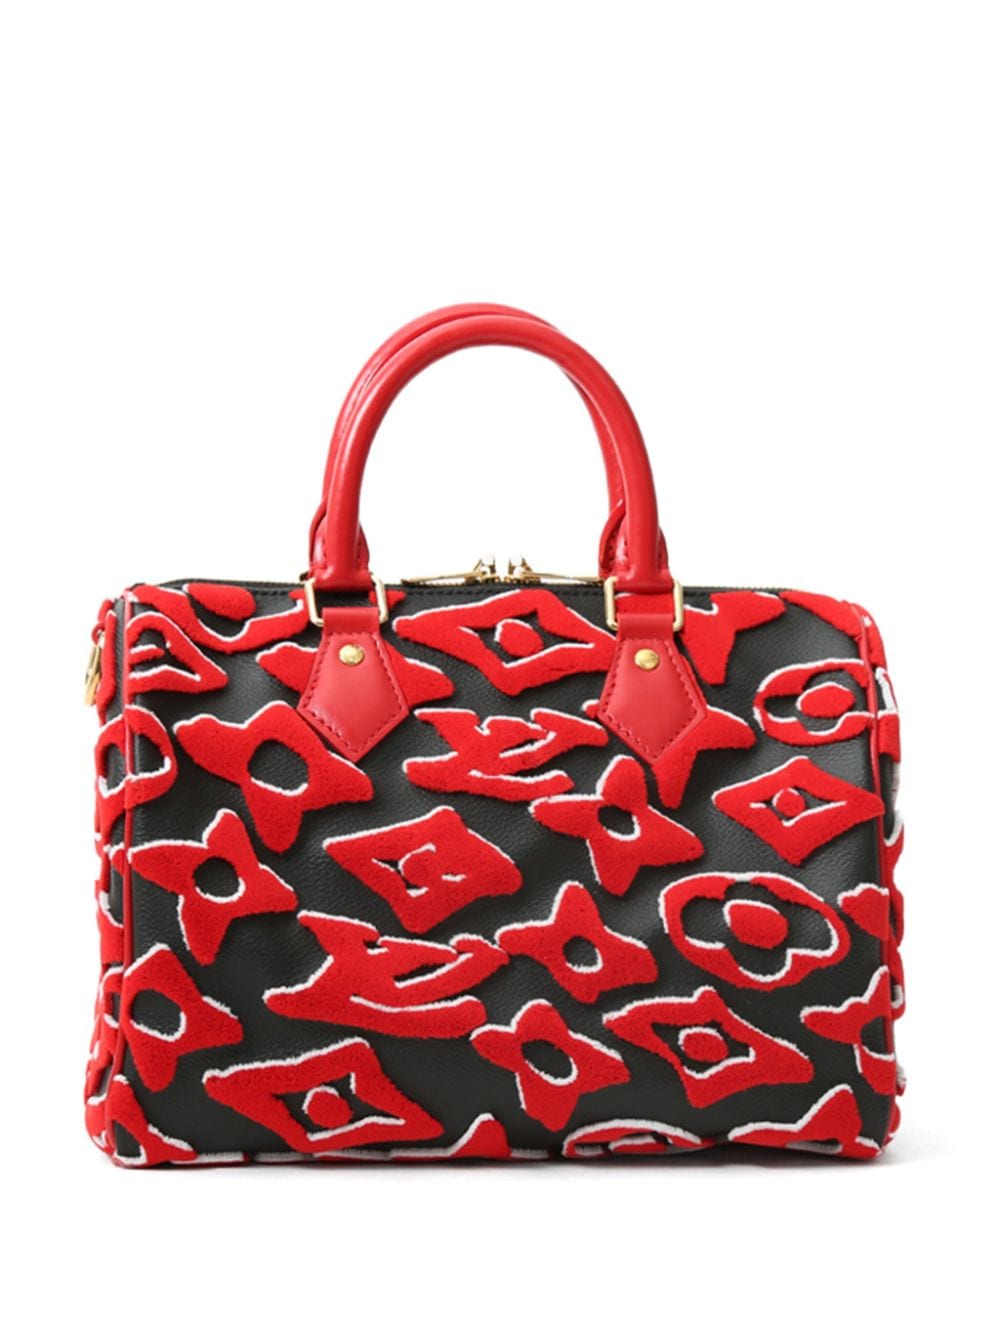 Louis Vuitton Pre-Owned x Urs Fischer Speedy handbag - Red von Louis Vuitton Pre-Owned